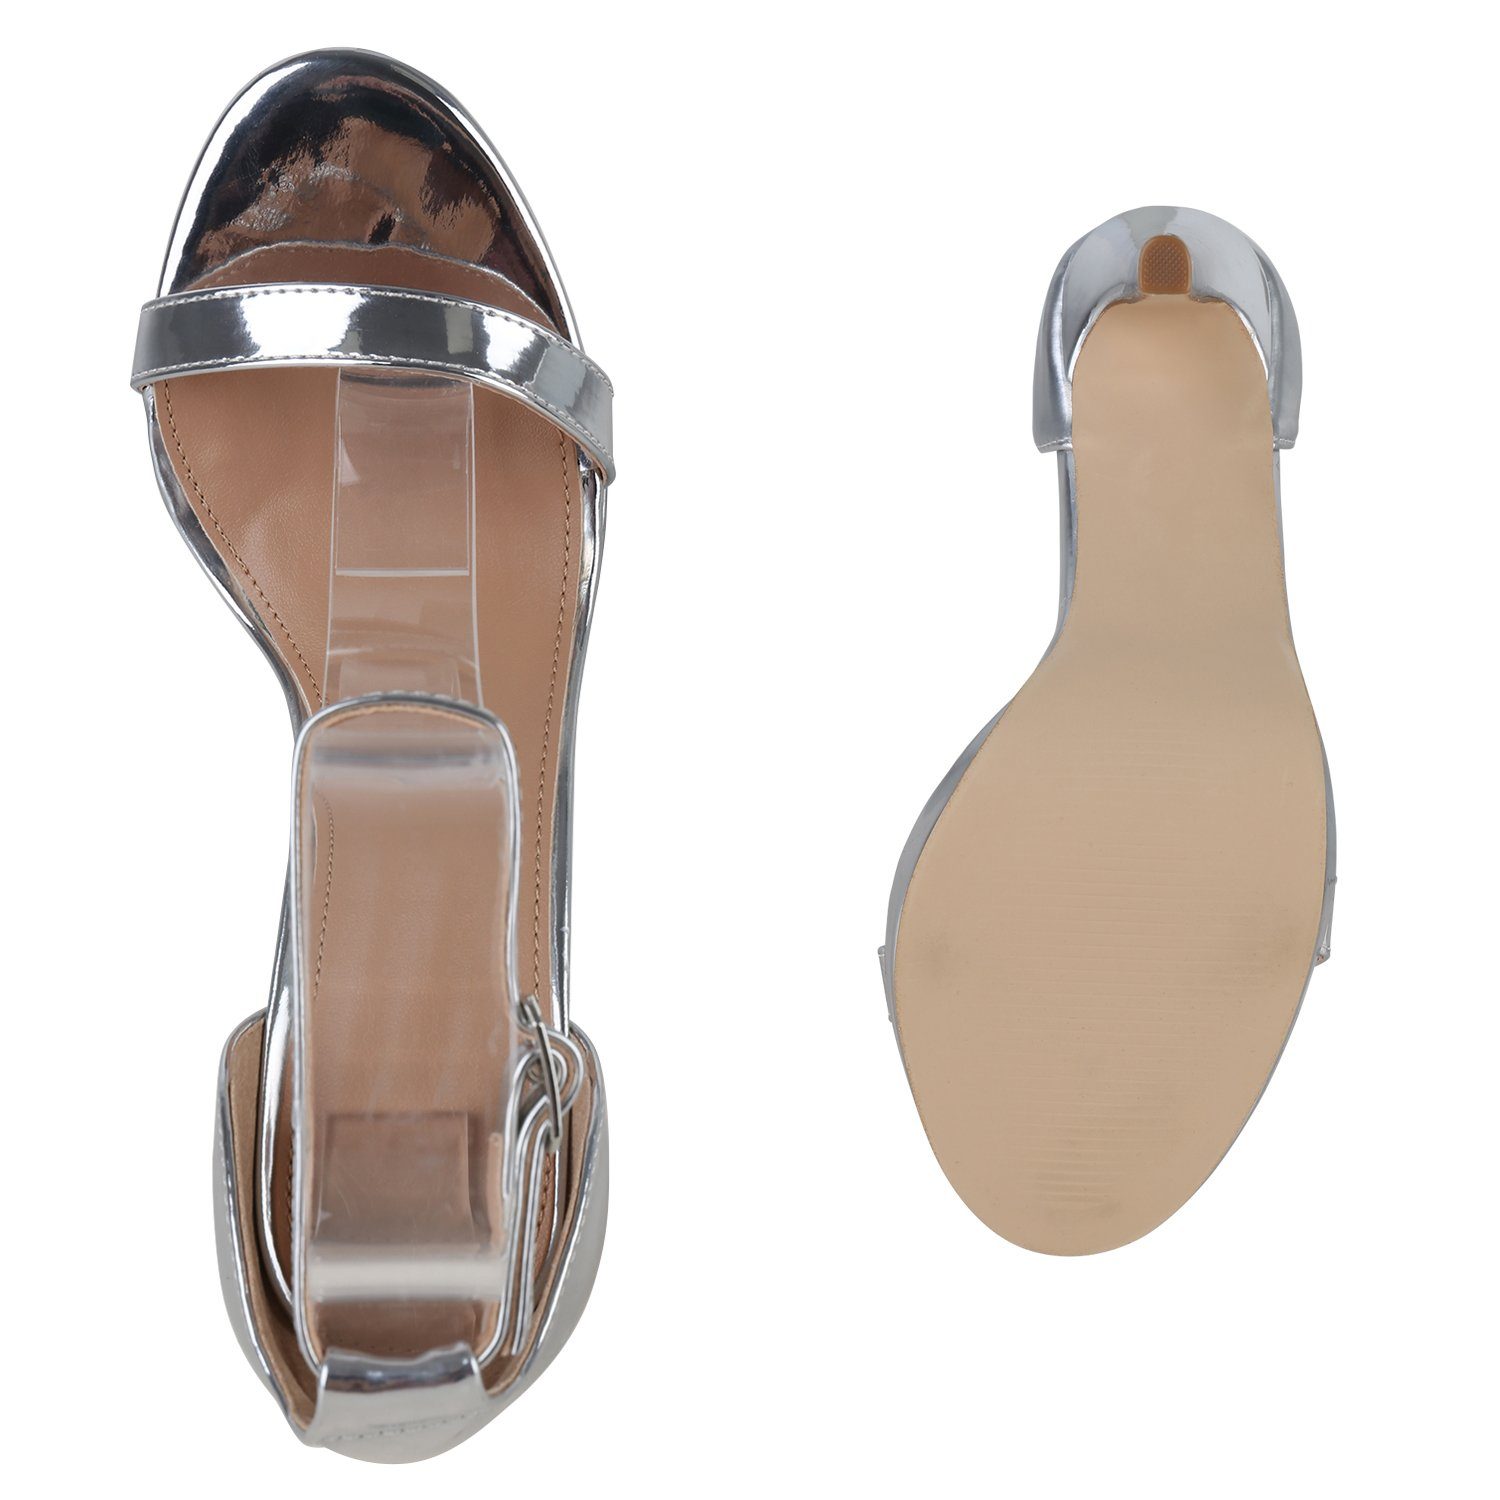 Schuhe Bequeme VAN Silber HILL 839340 Sandalette